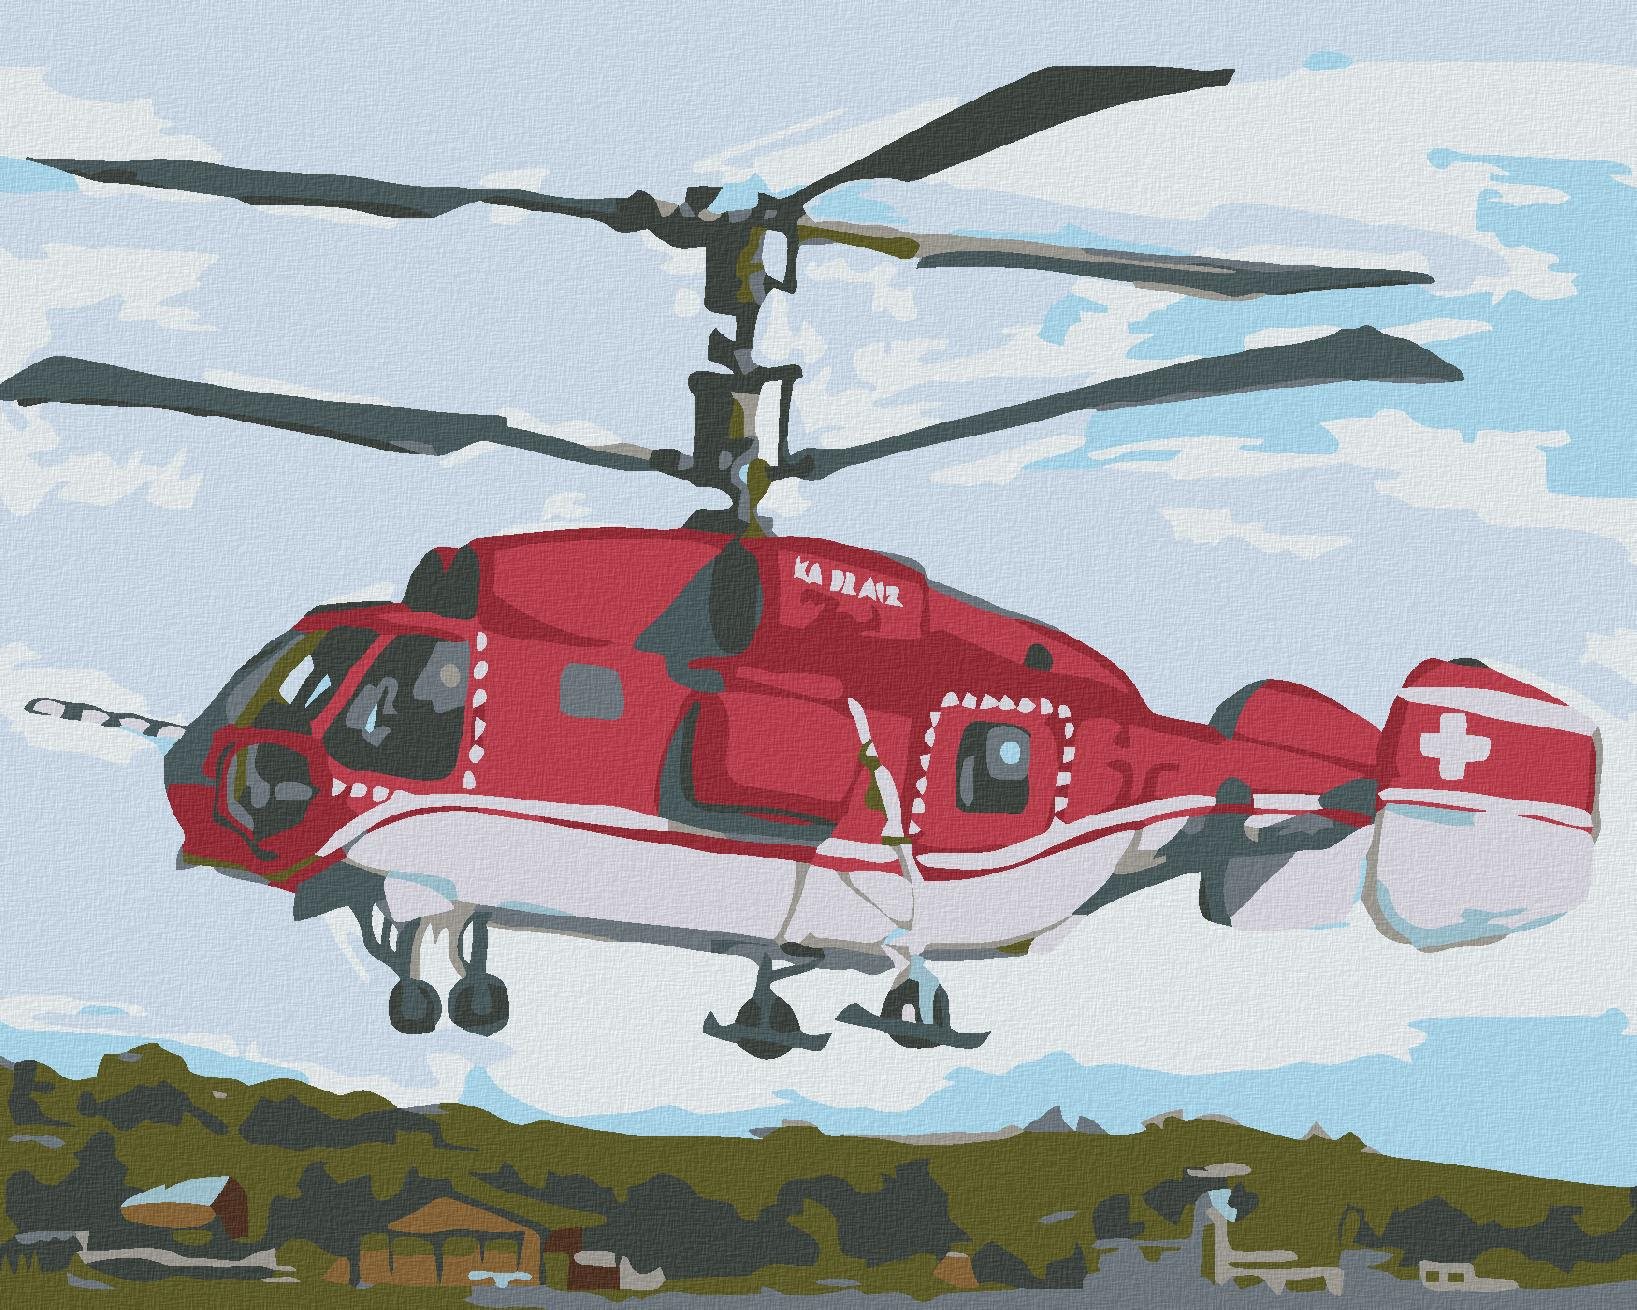 Maľovanie podľa čísel - Záchranársky vrtuľník, 50 x 40 cm, bez rámu a napnutého plátna